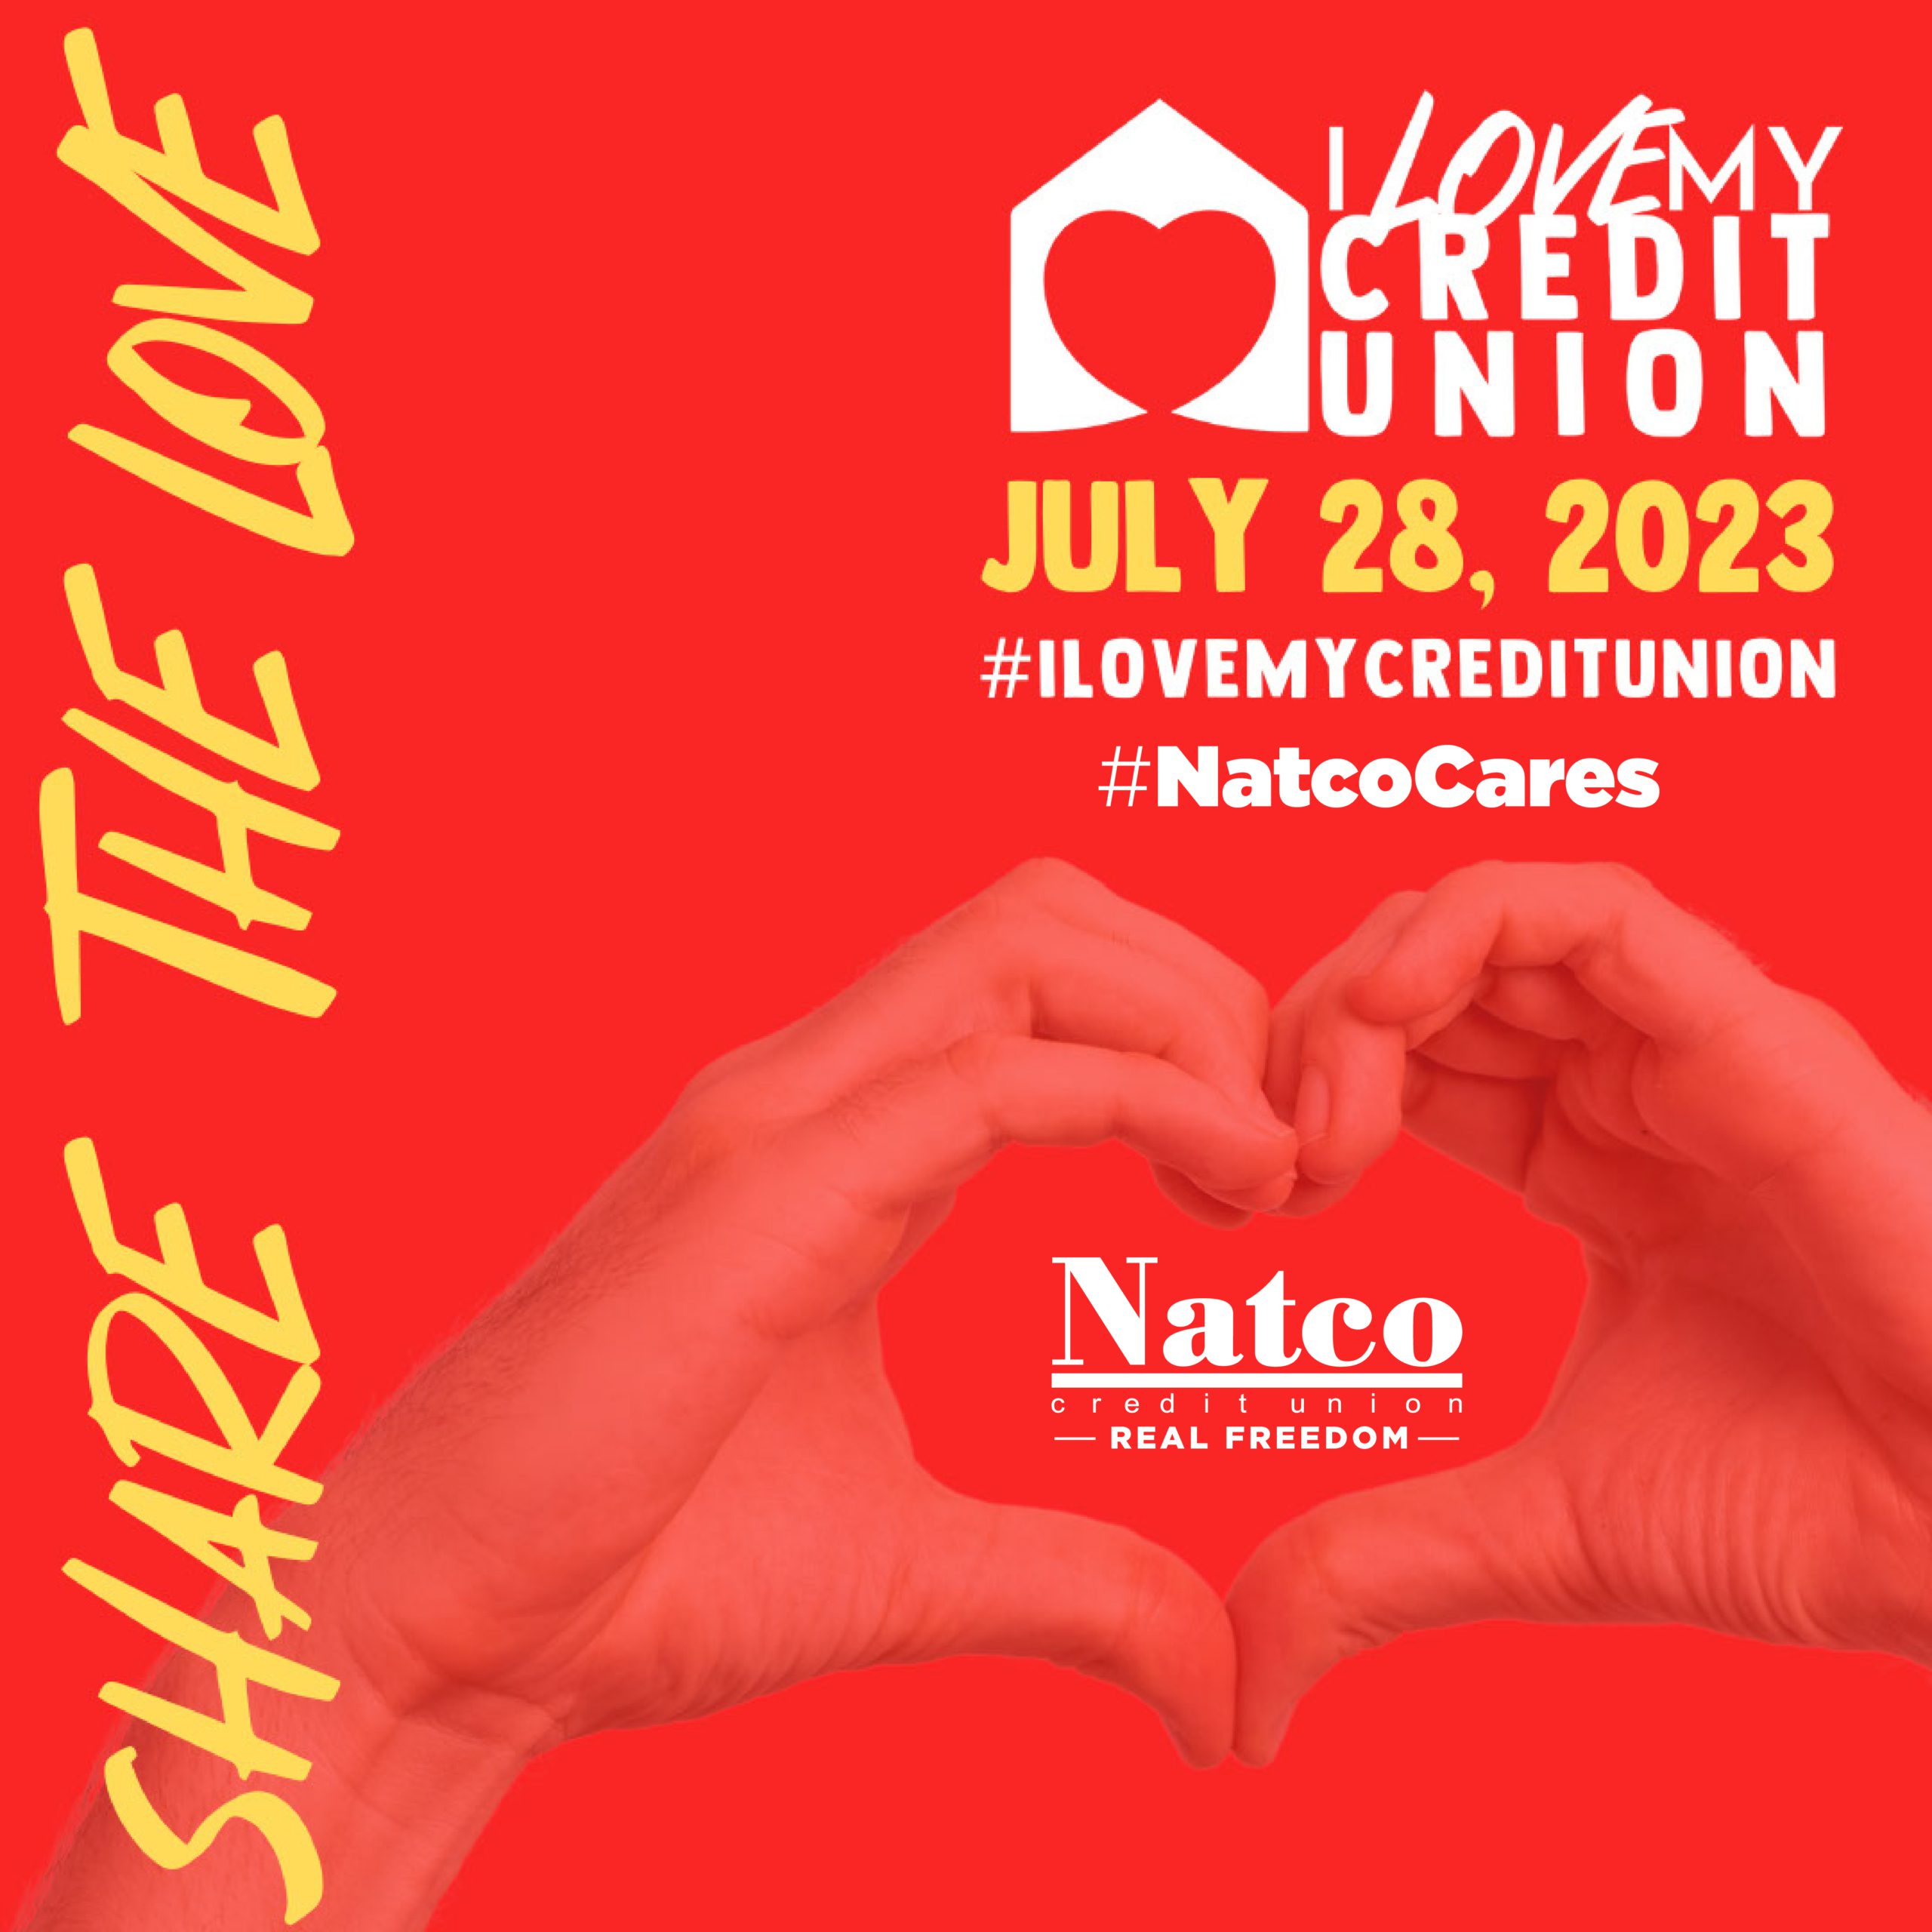 Share the love. I love my credit union - Natco #NatcoCares